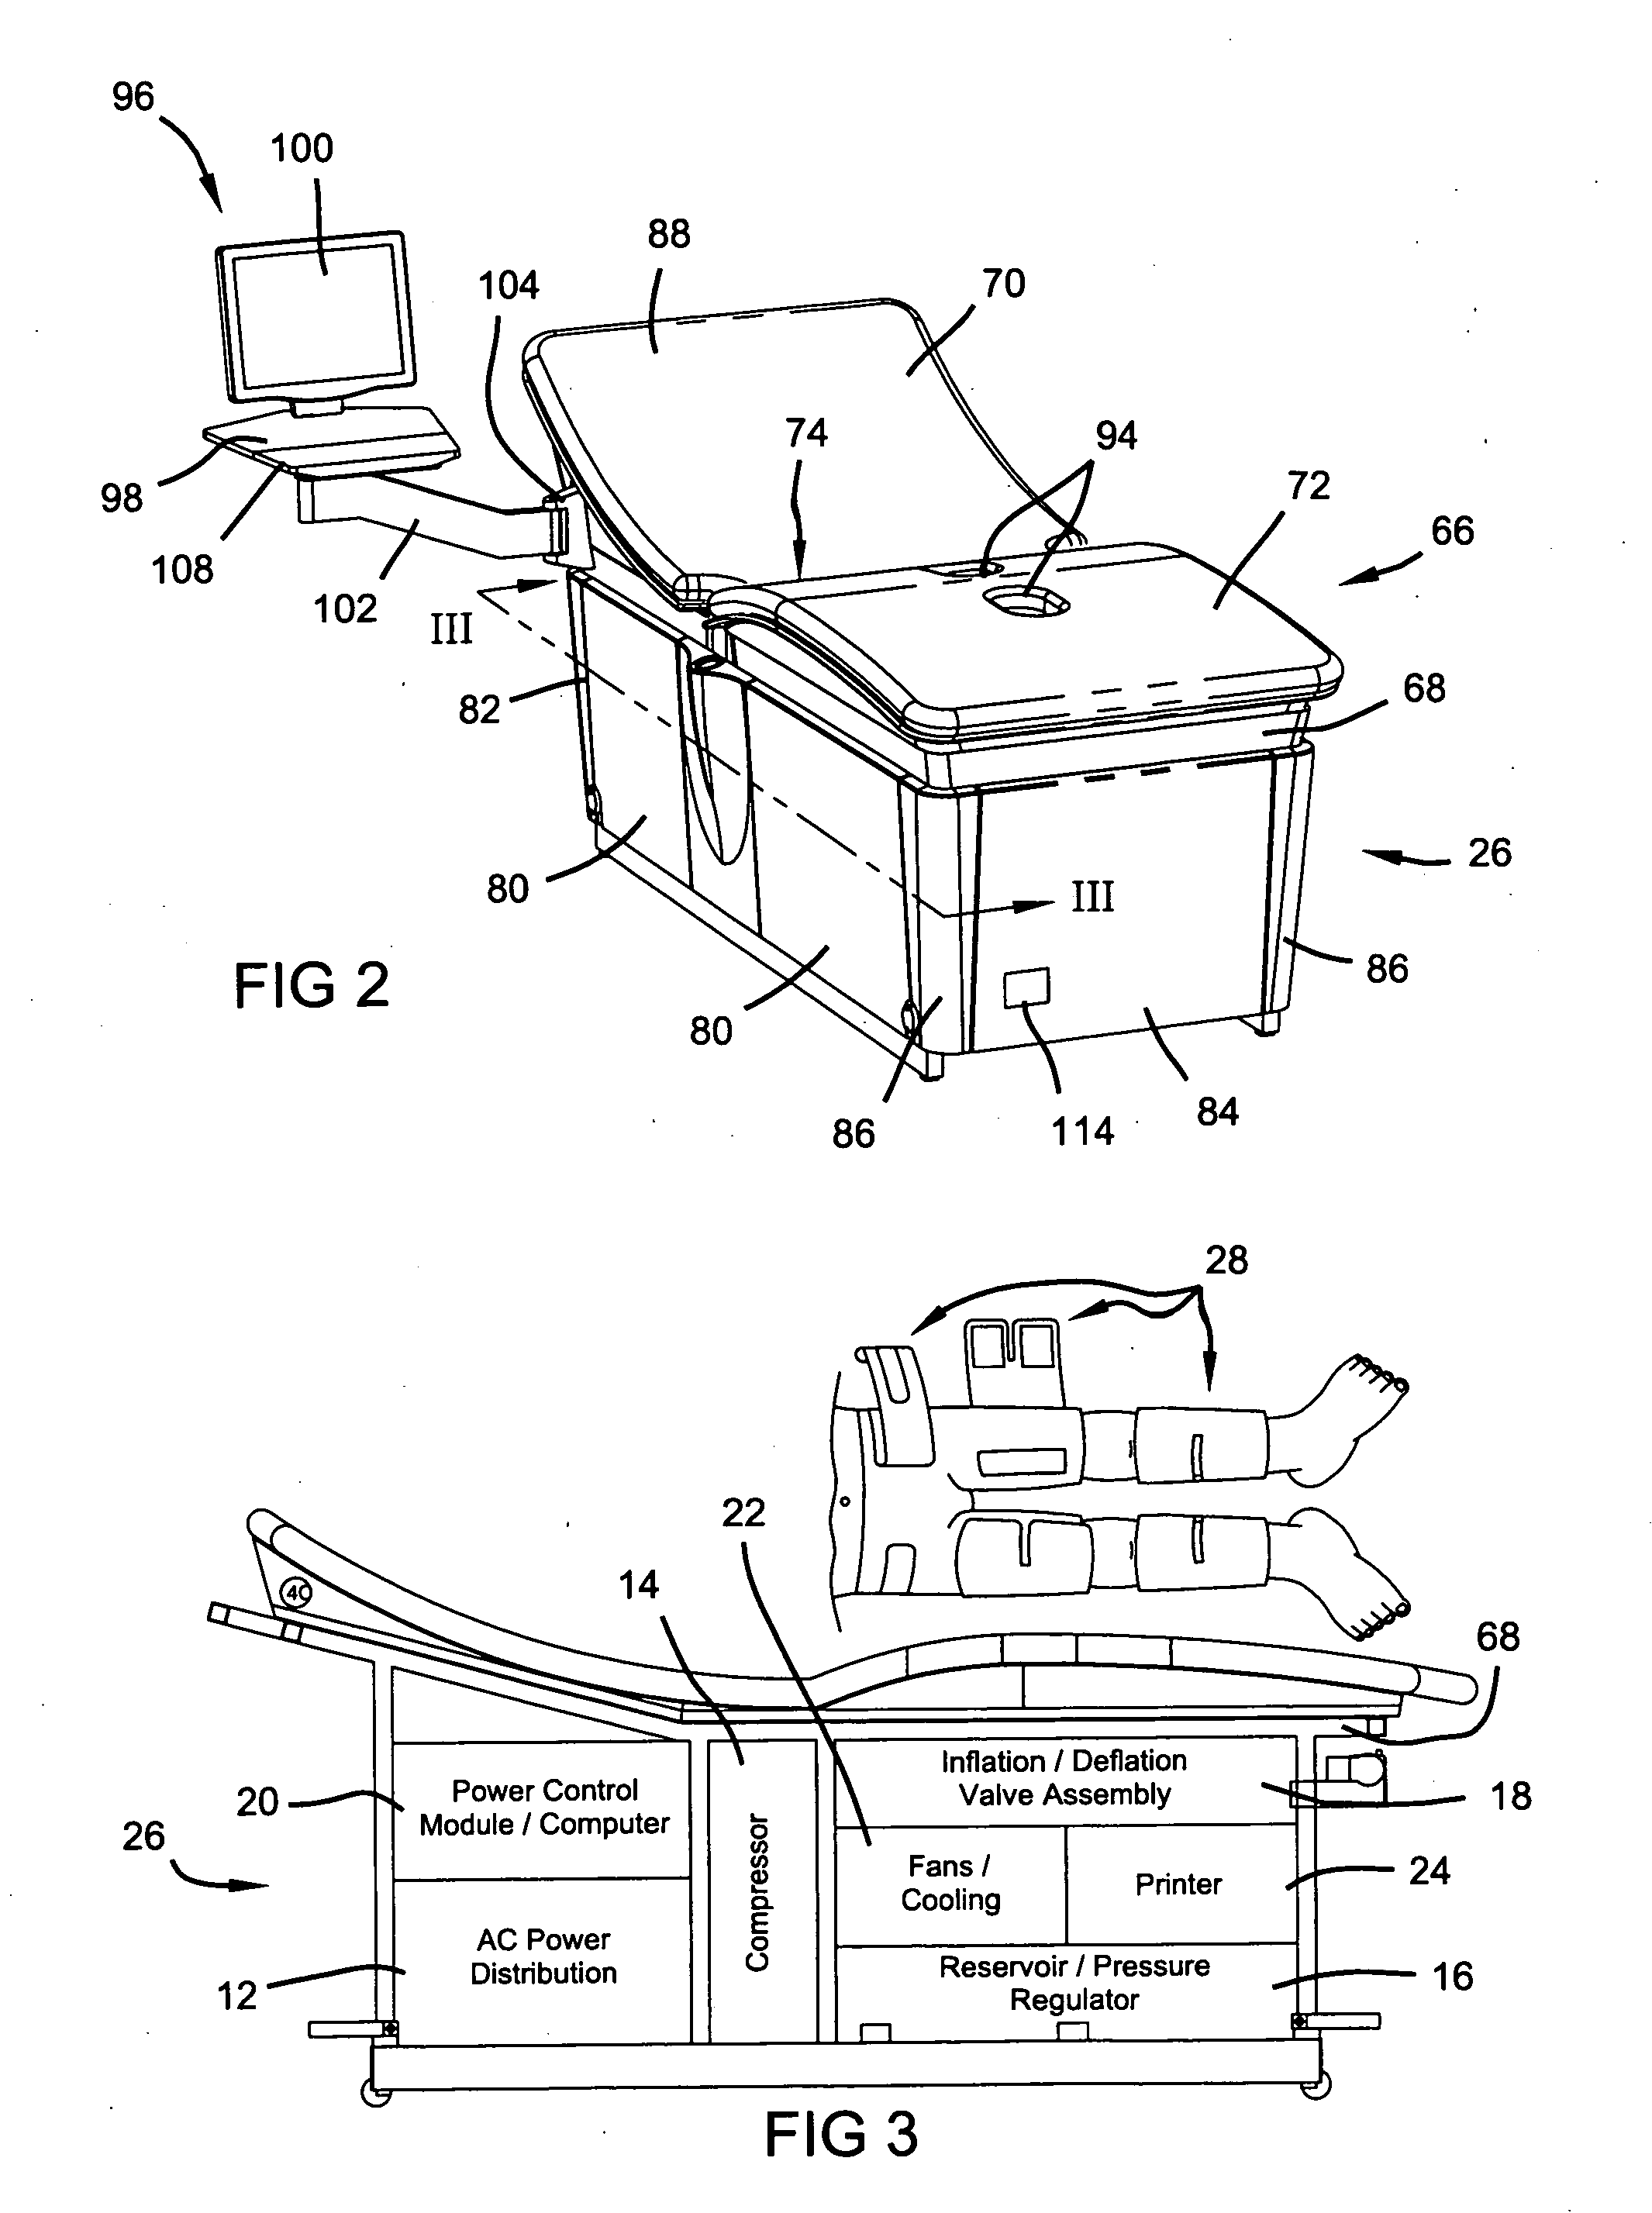 External counterpulsation device having a curvilinear bed